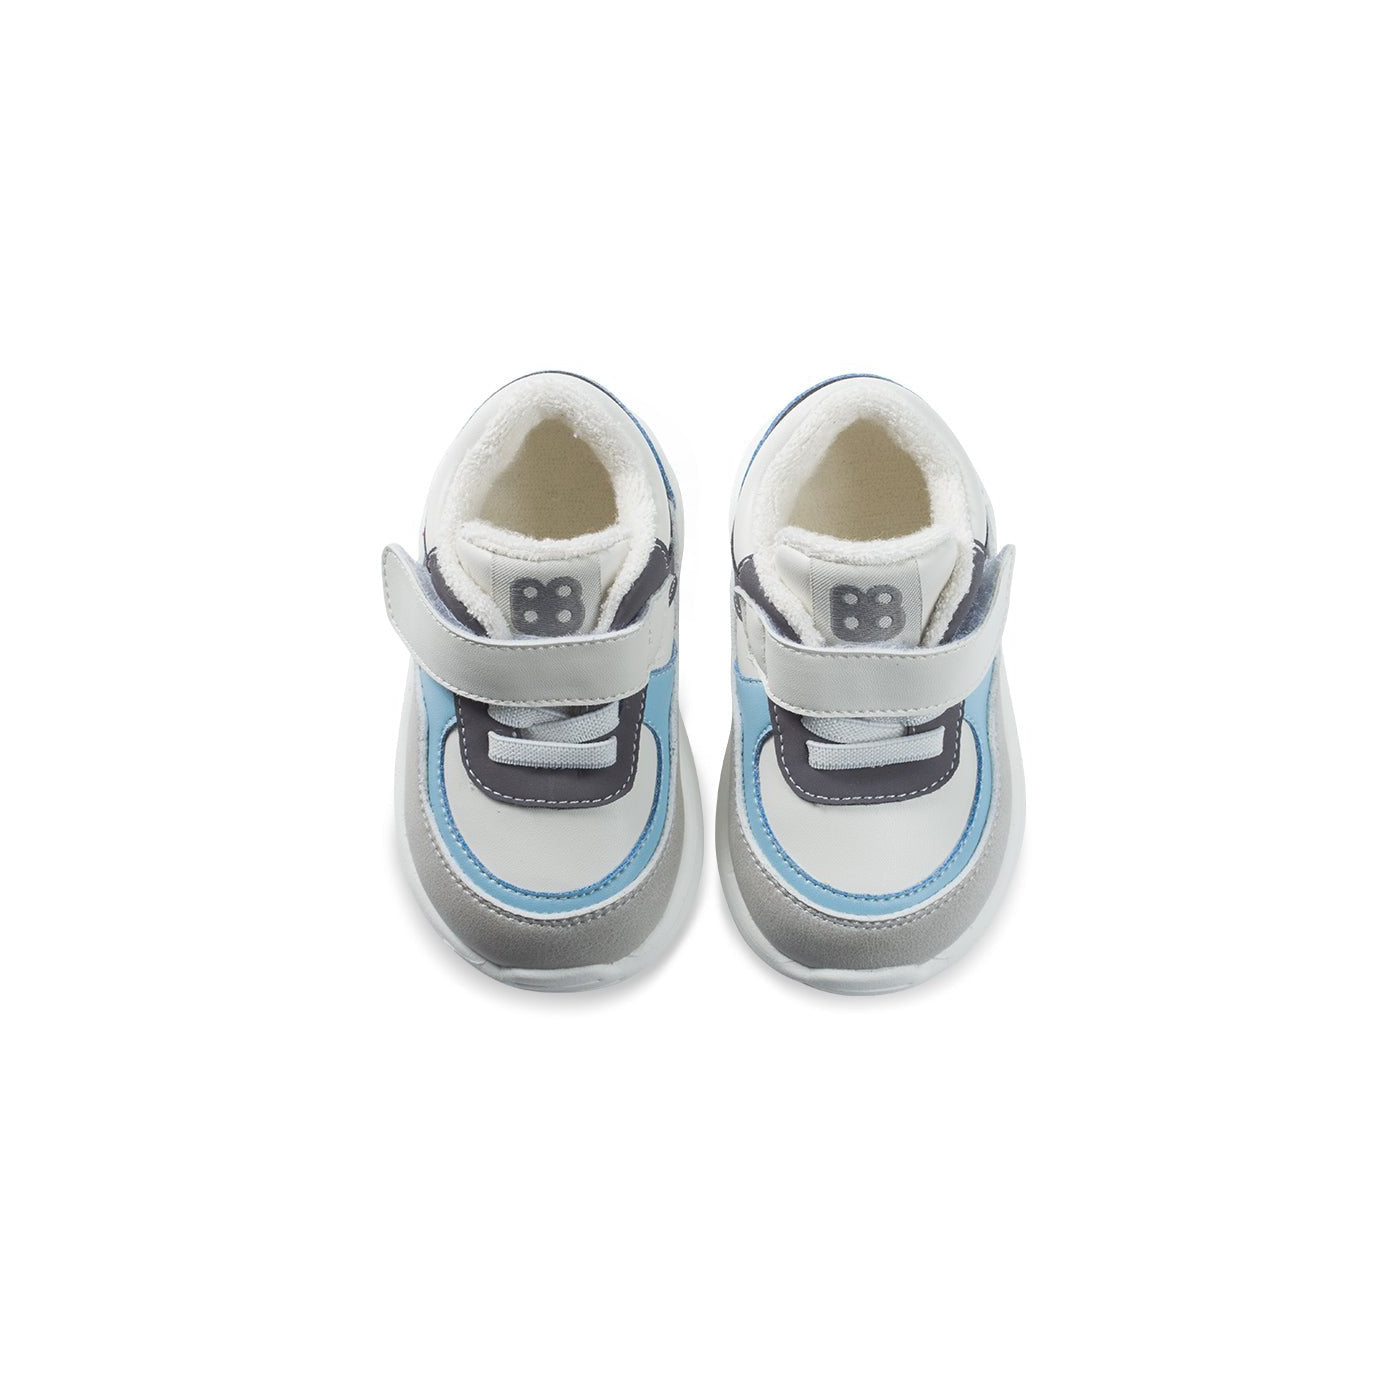 Playground Cruiser Soft Sole Anti-slip Pre-walker Blue Baby Sneakers - 0cm